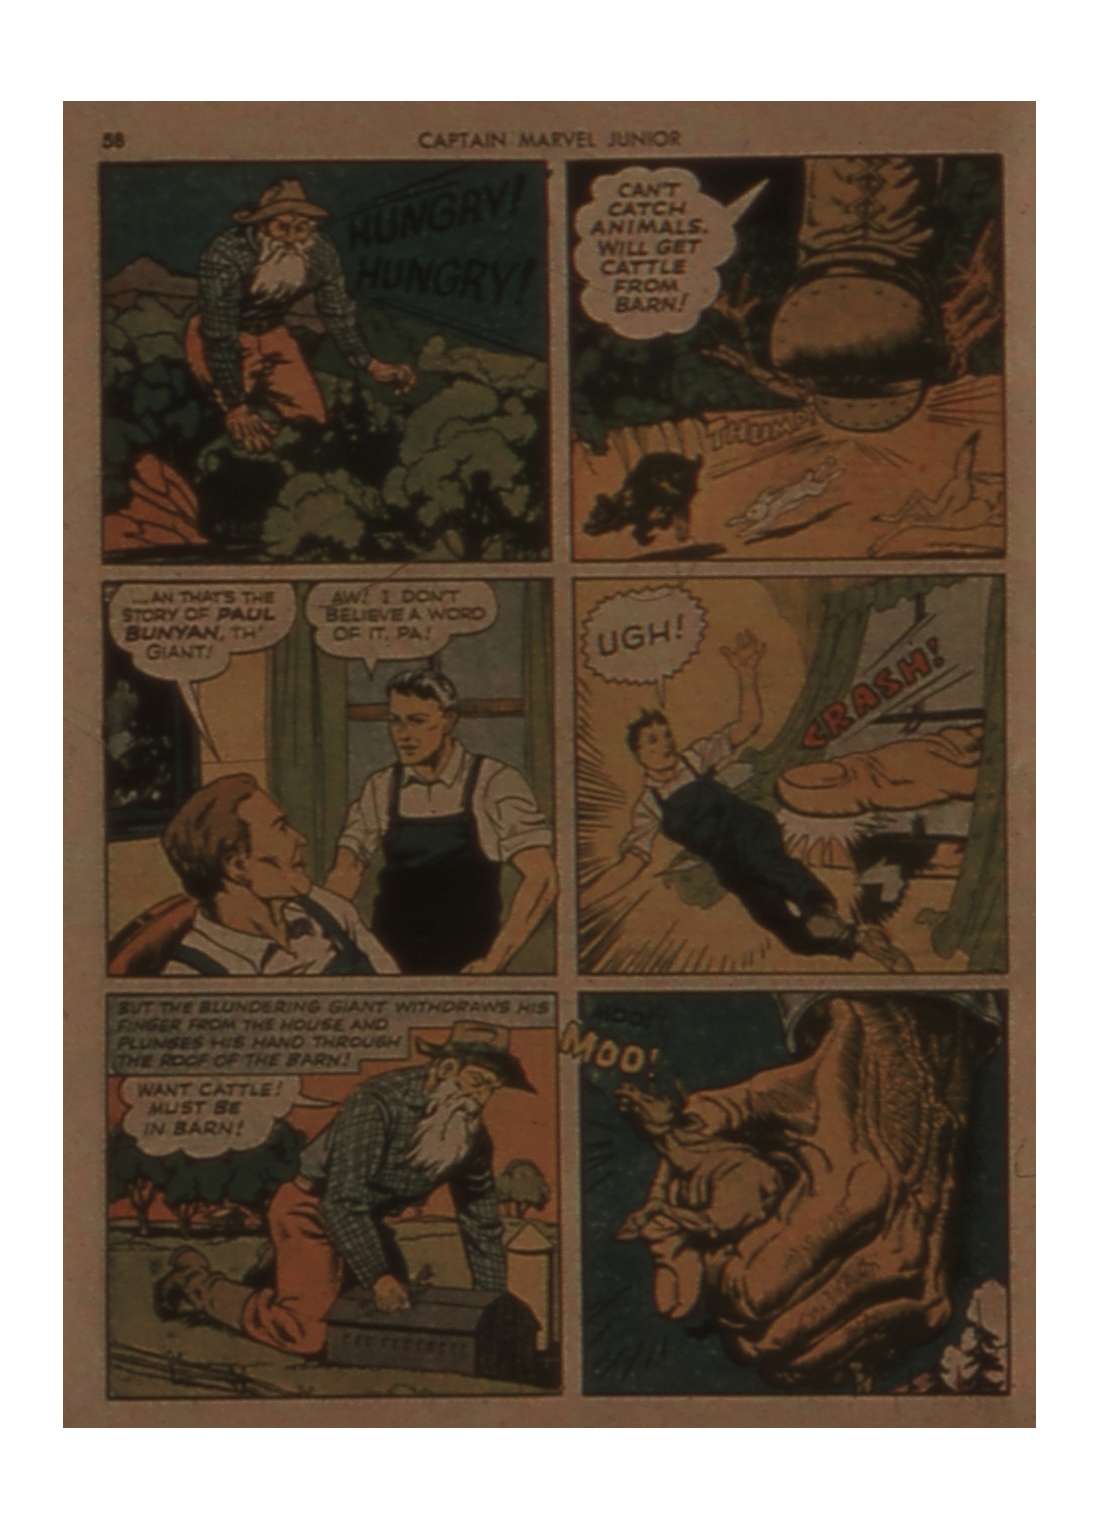 Read online Captain Marvel, Jr. comic -  Issue #3 - 58